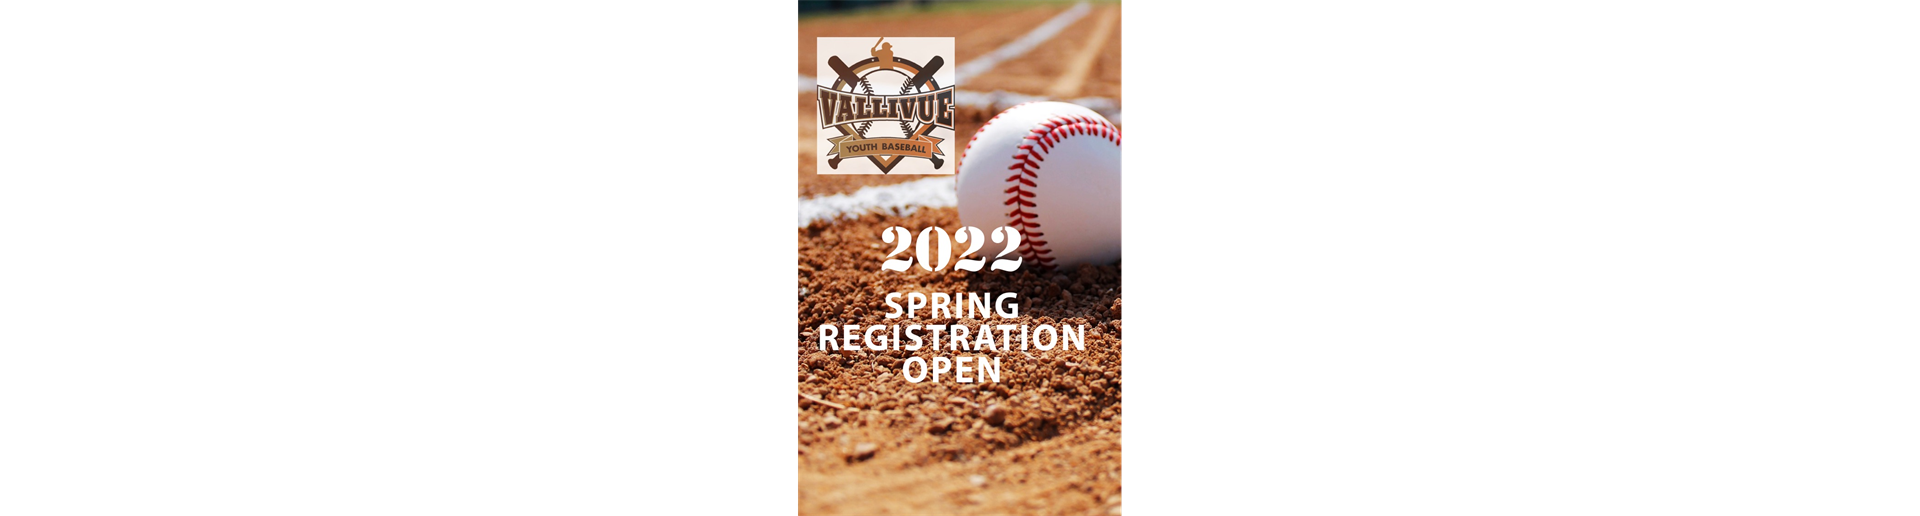 2022 Spring Registration Now Open!